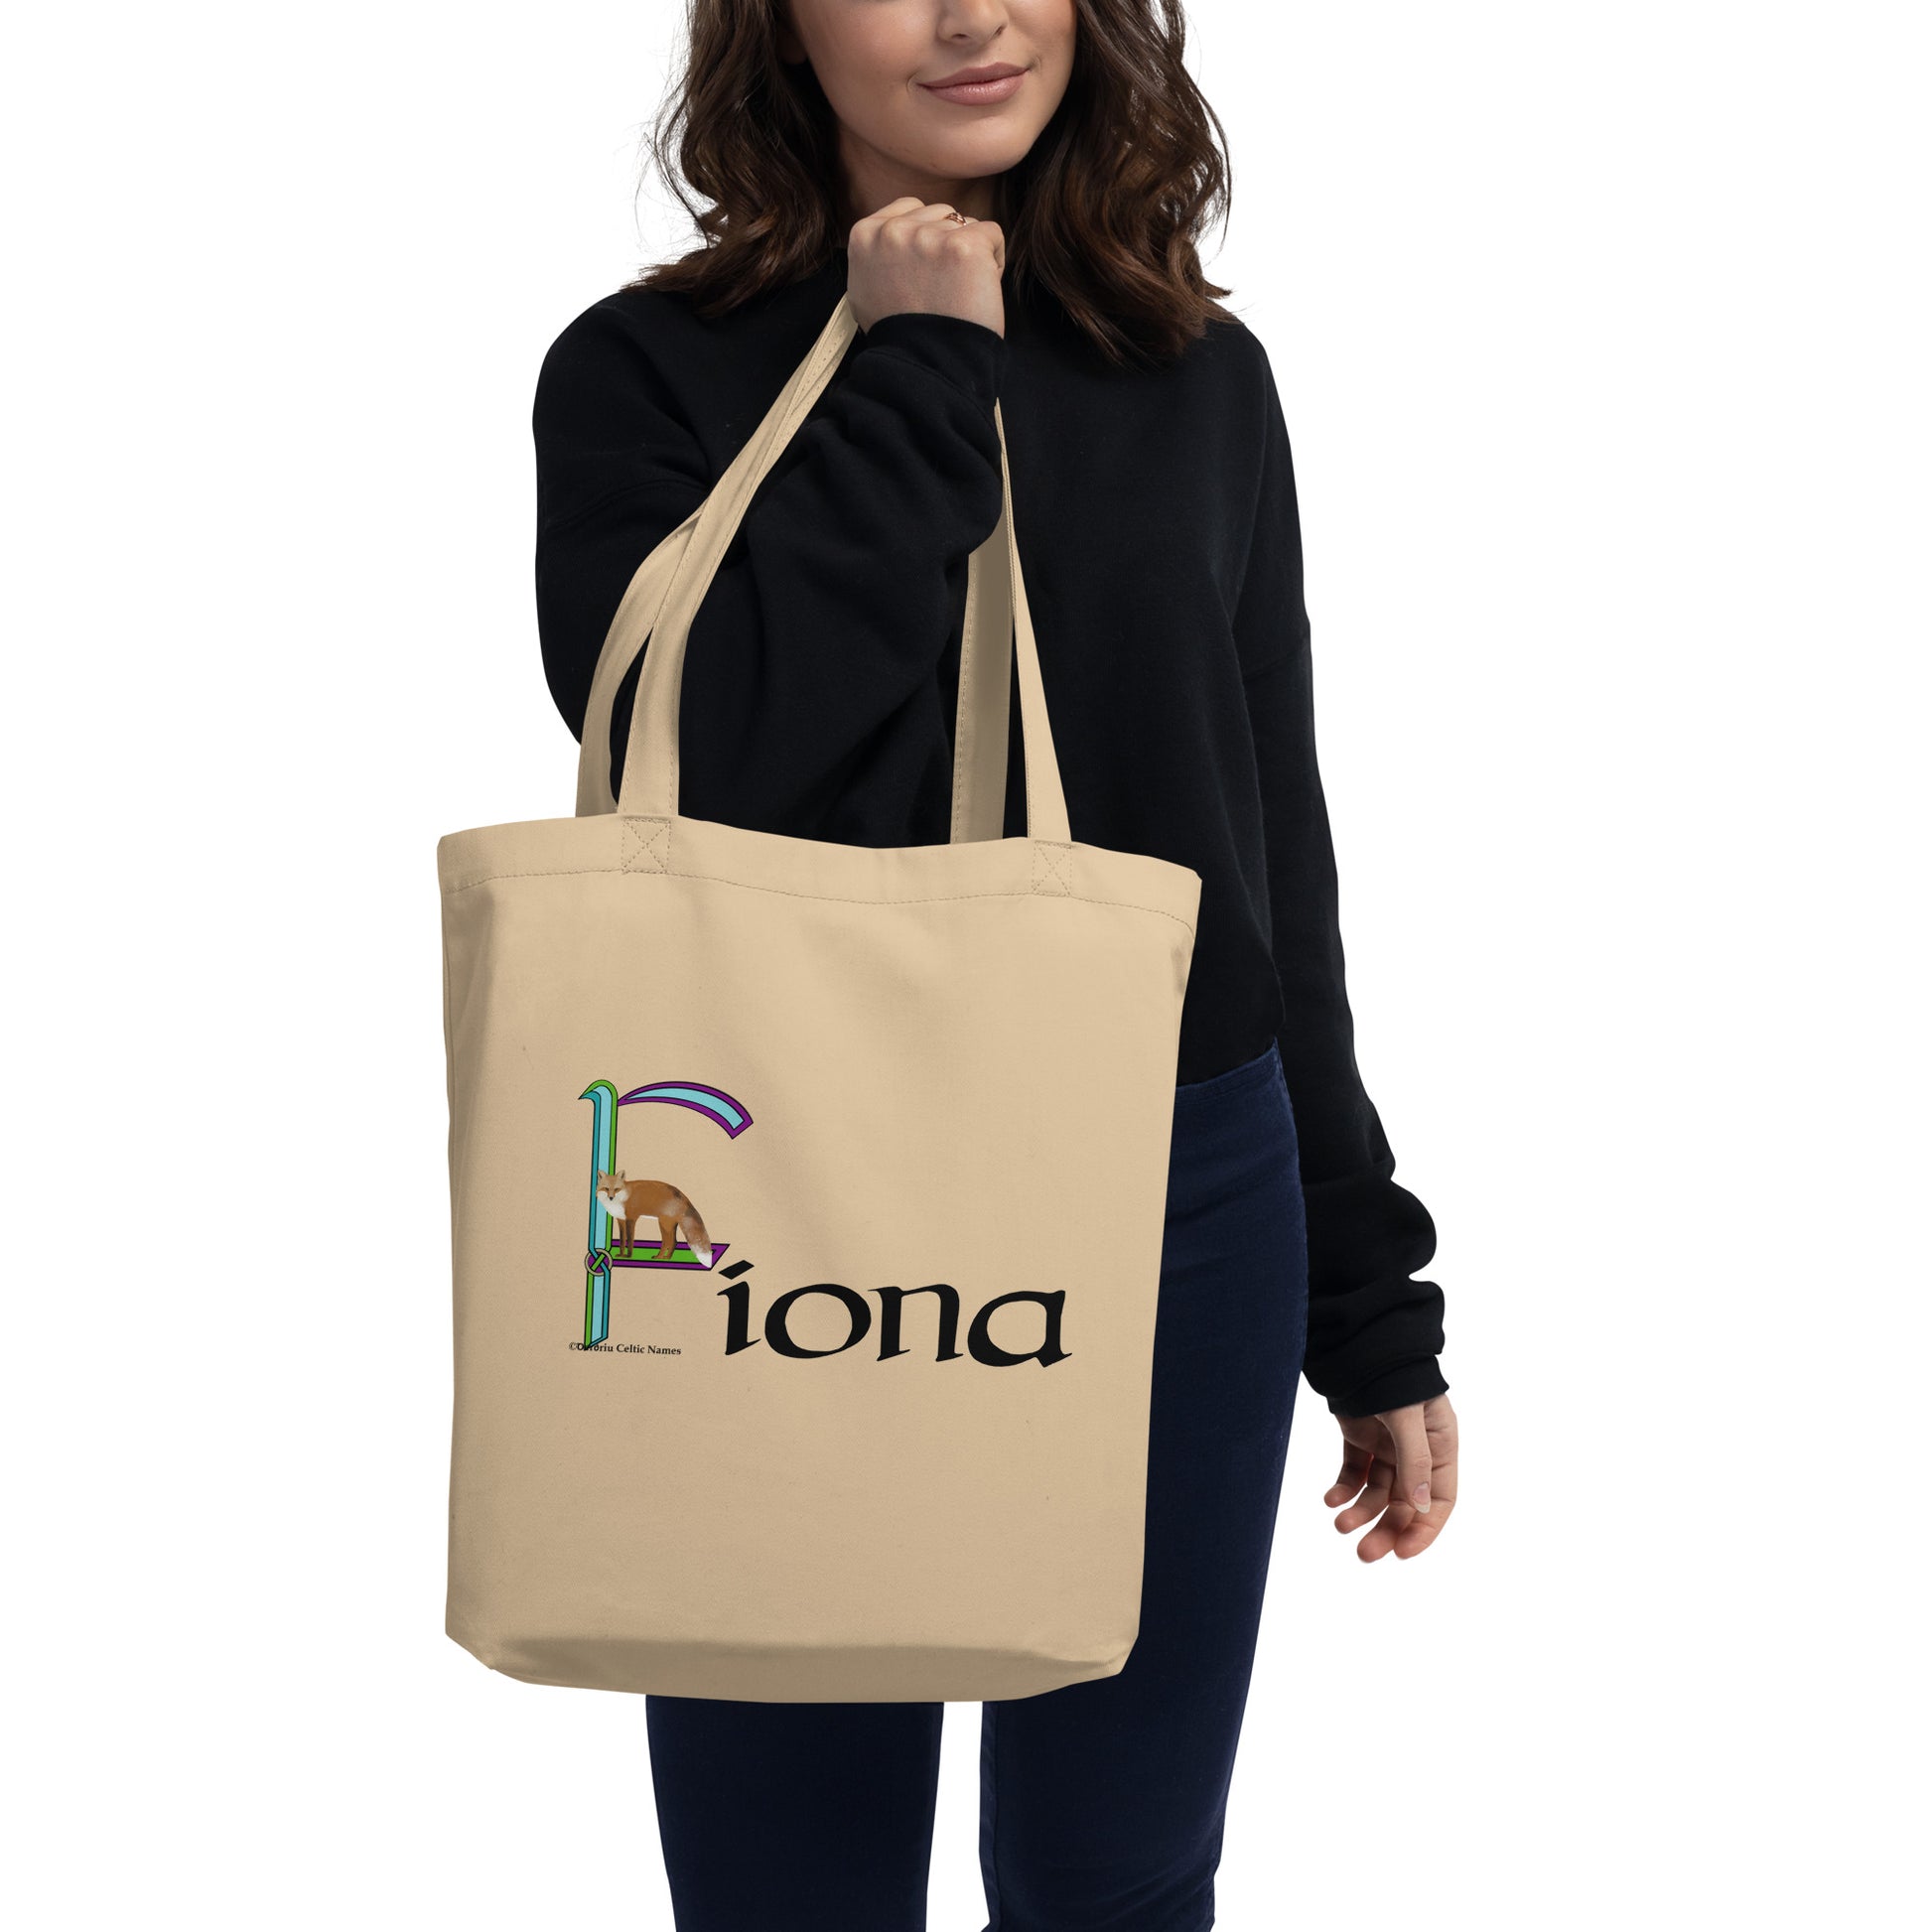 Fíona (Fiona) - Personalized Eco Tote Bag with Irish name Fíona – Derdriu  Store